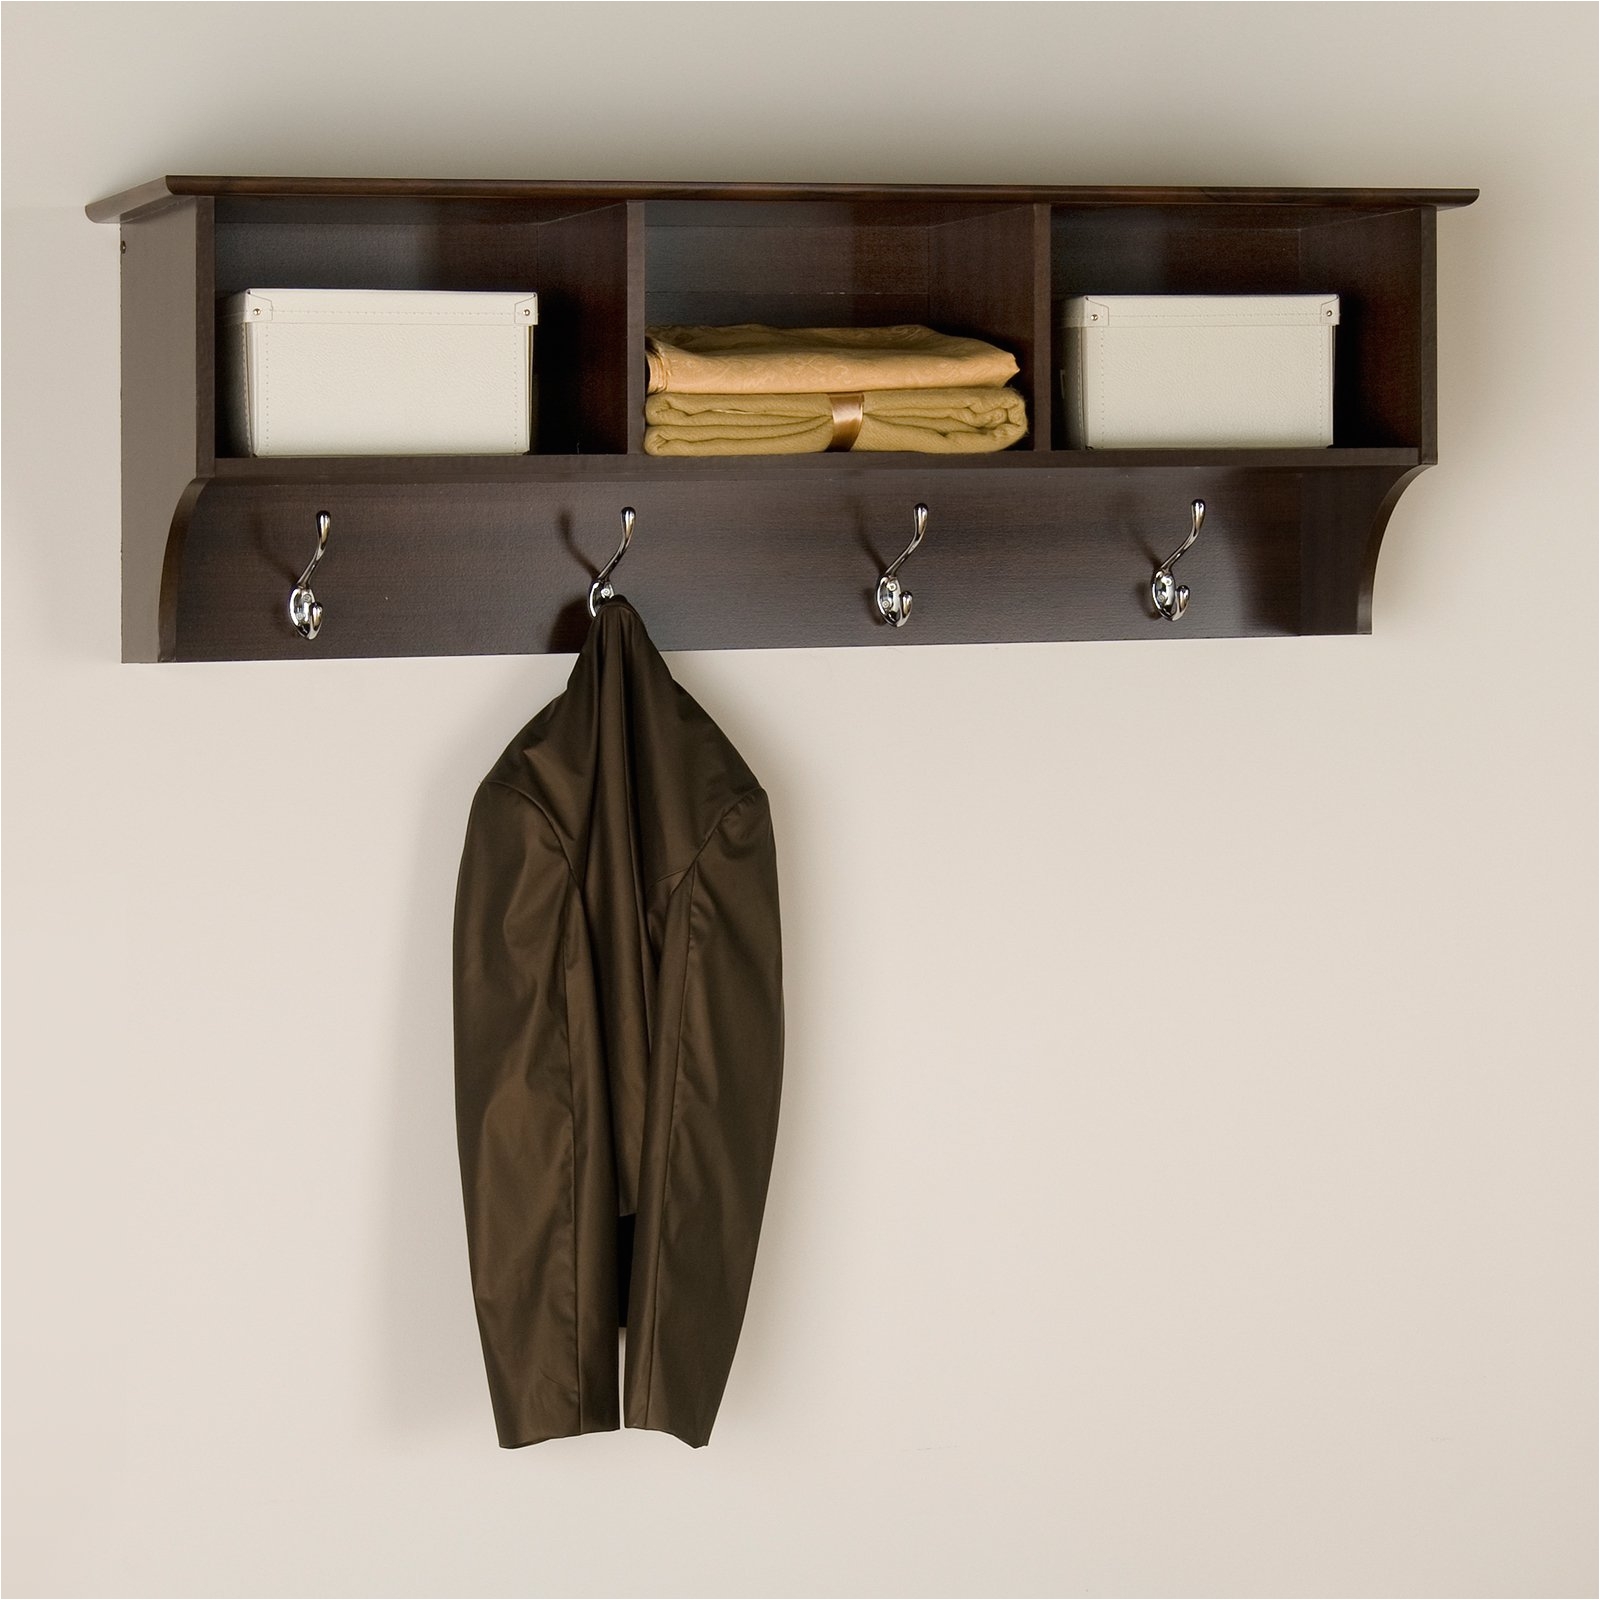 image of master entryway shelf with hooks